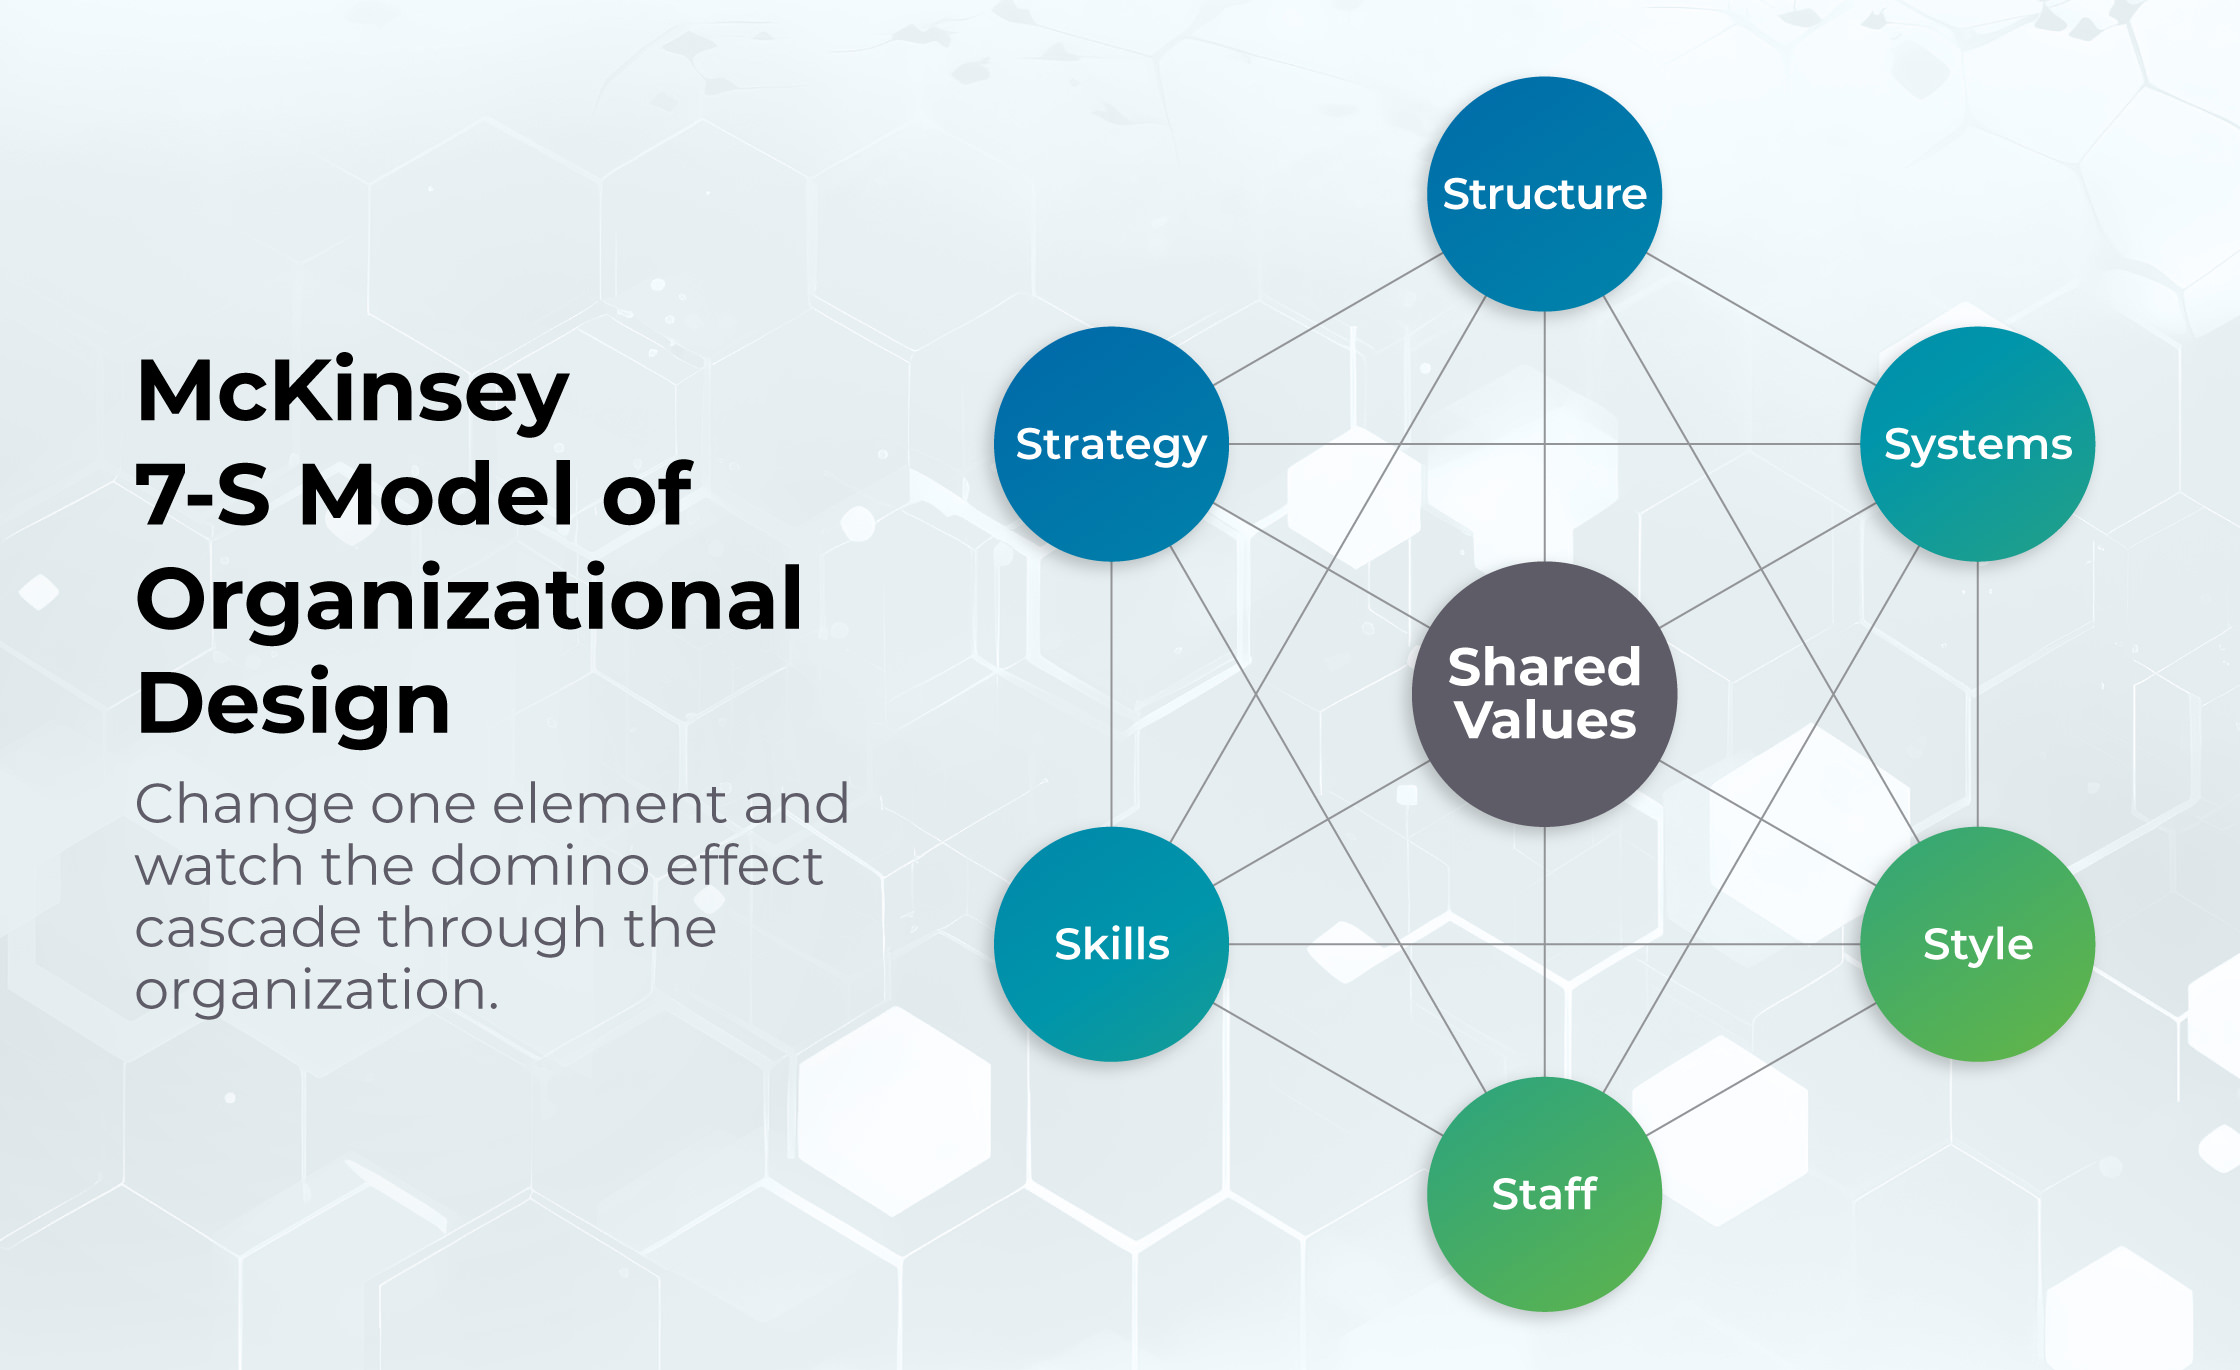 McKinsey 7-S Model of Organizational Design